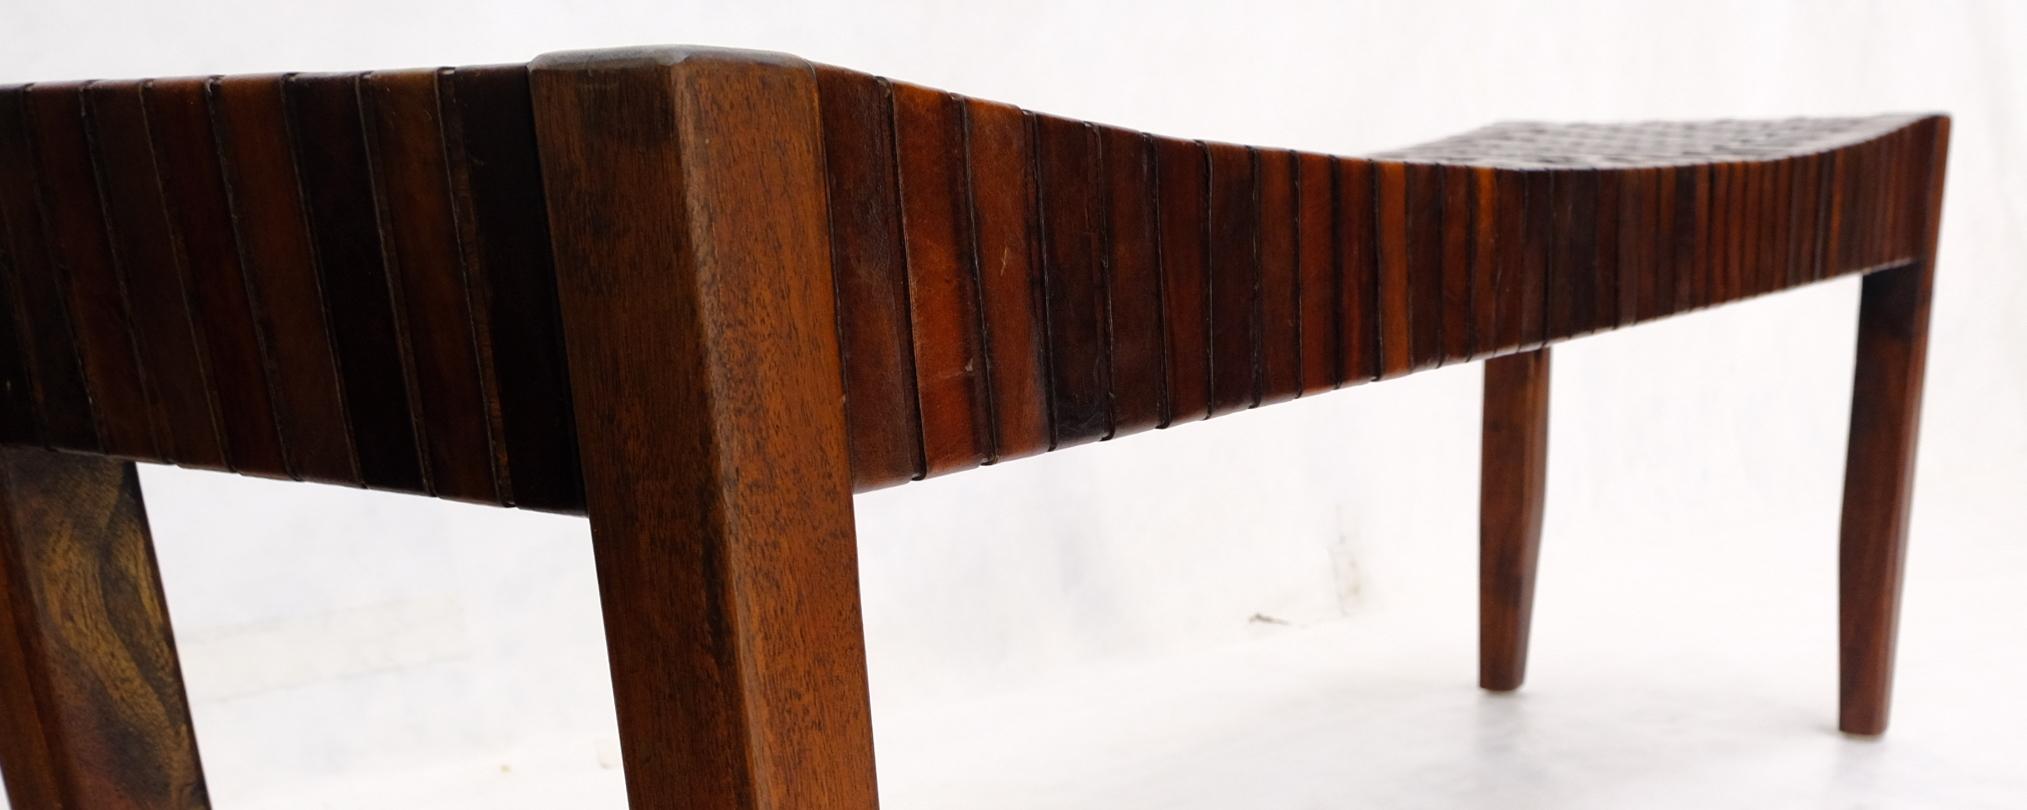 Leather Strap Seat Upholstery Hardwood Frame Modern Bench 1